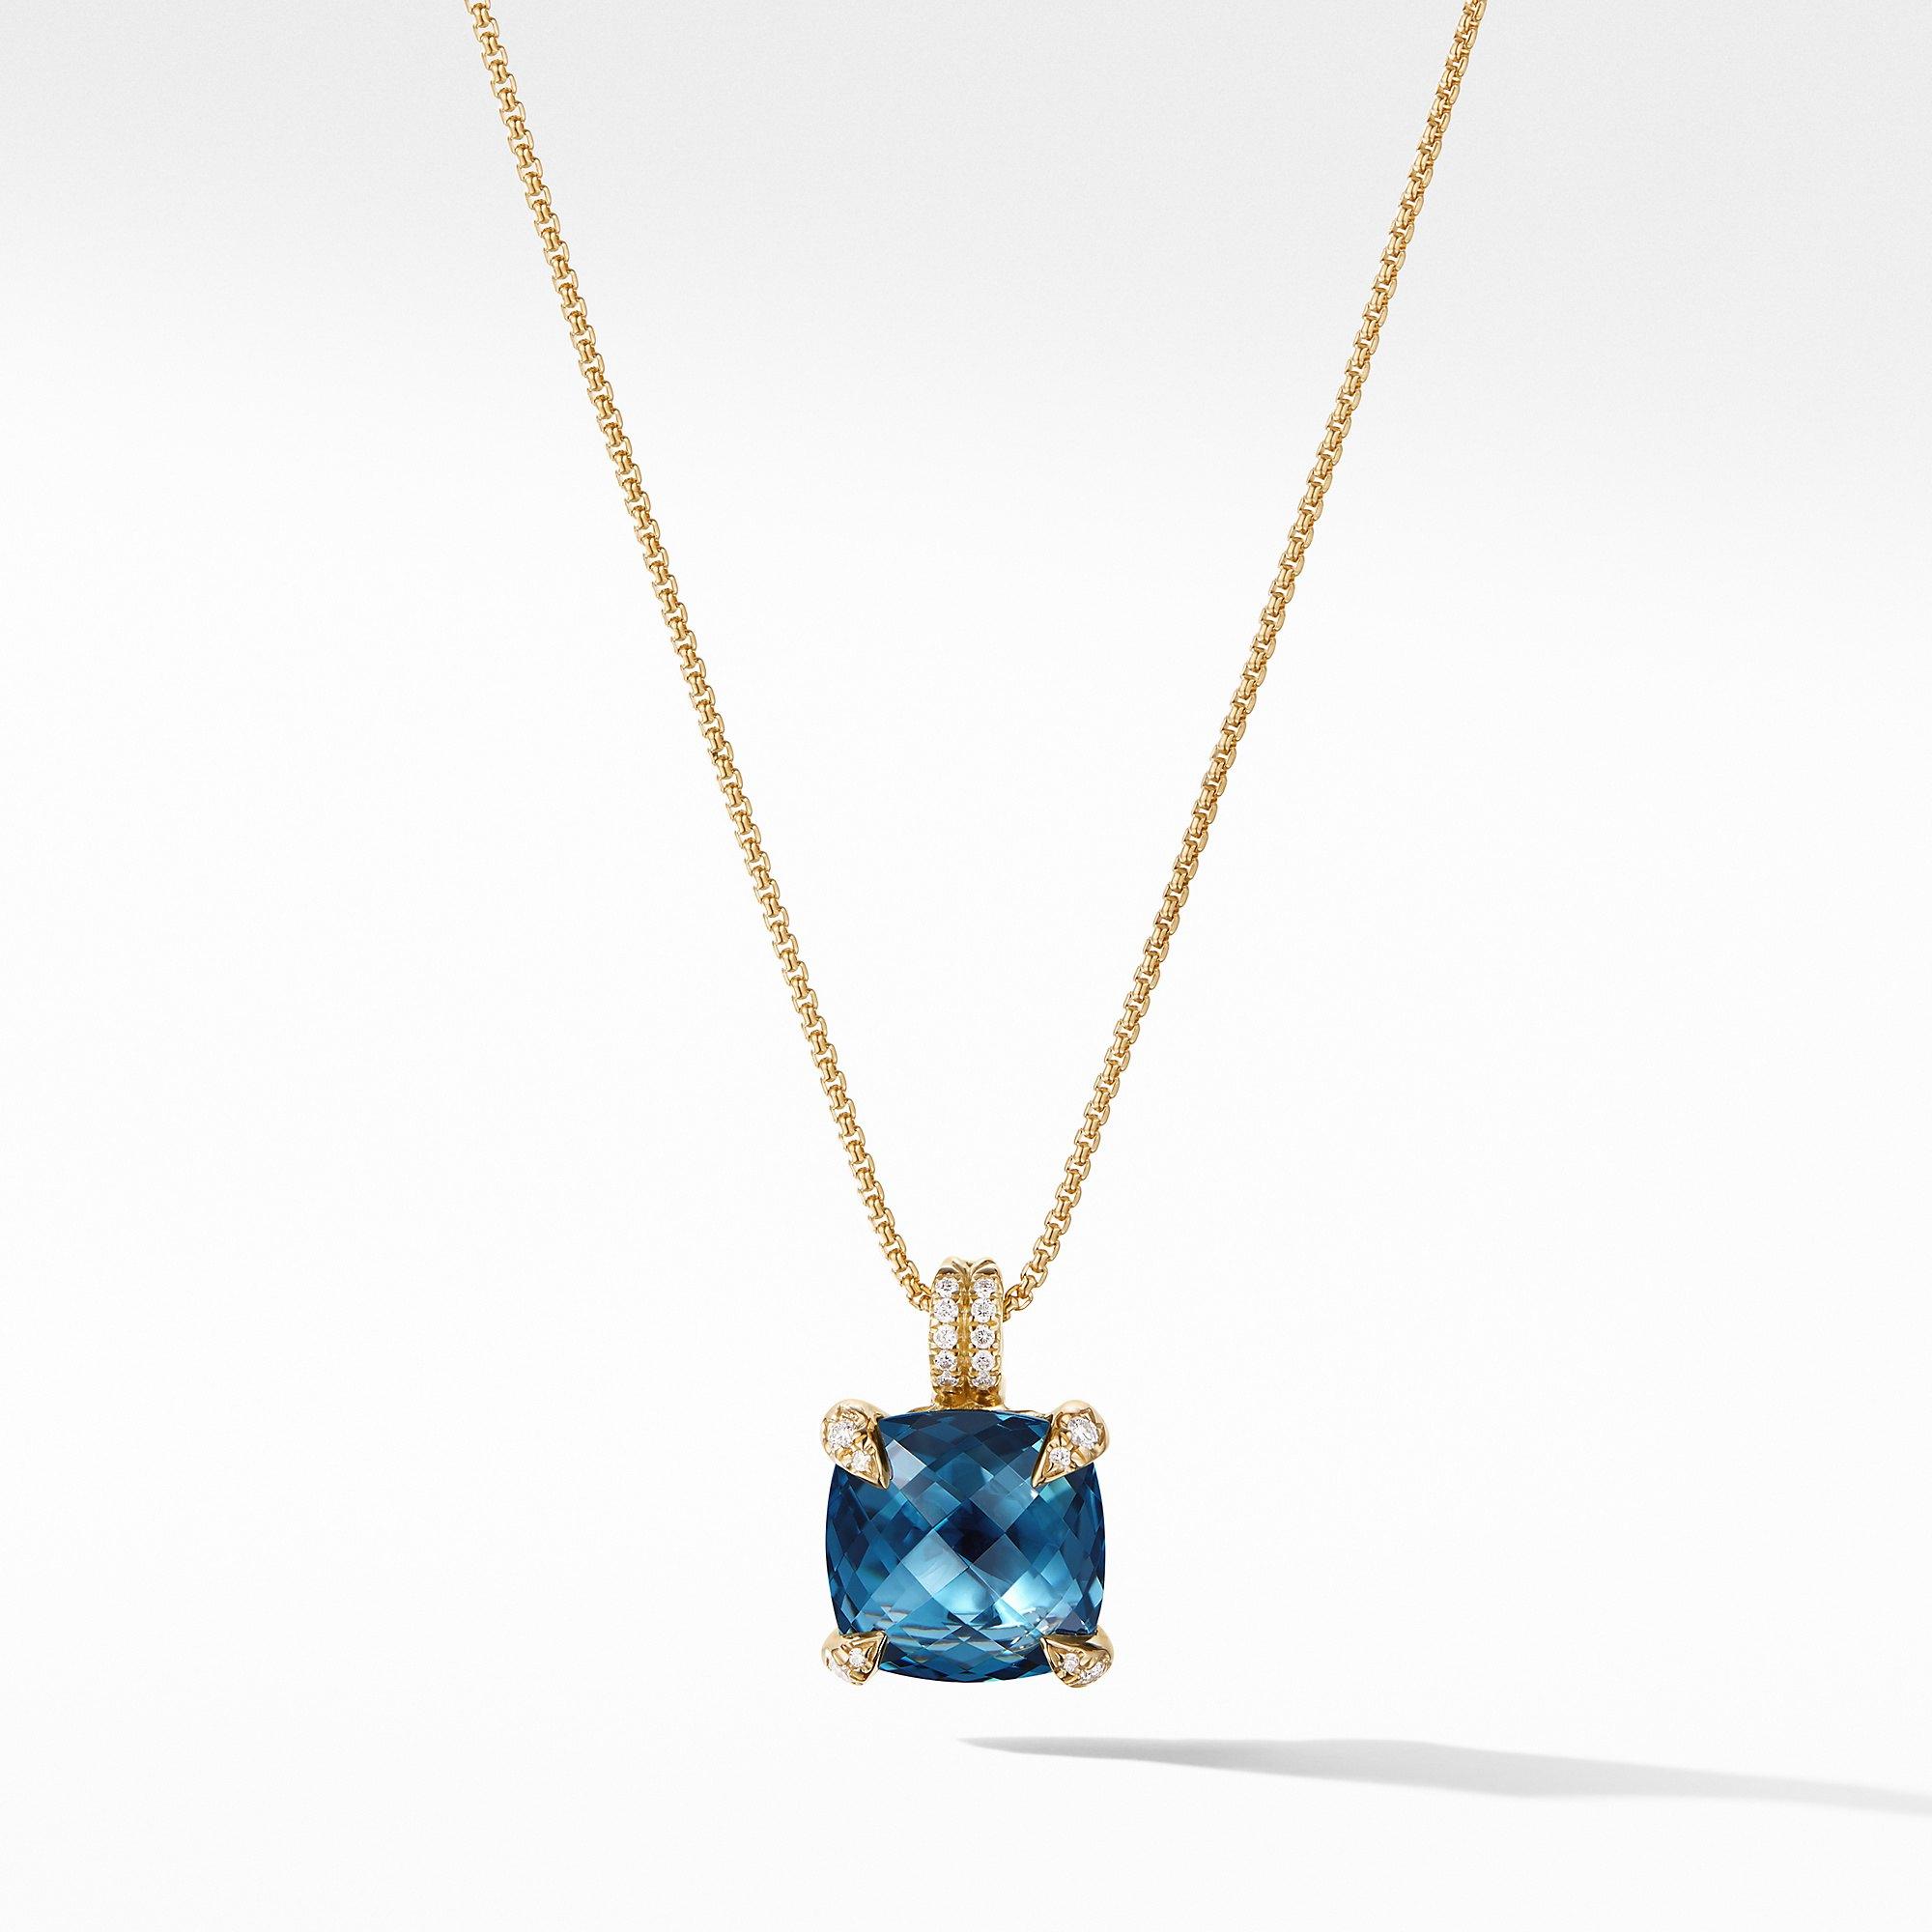 David Yurman Chatelaine Hampton Blue Pendant Necklace with Diamonds